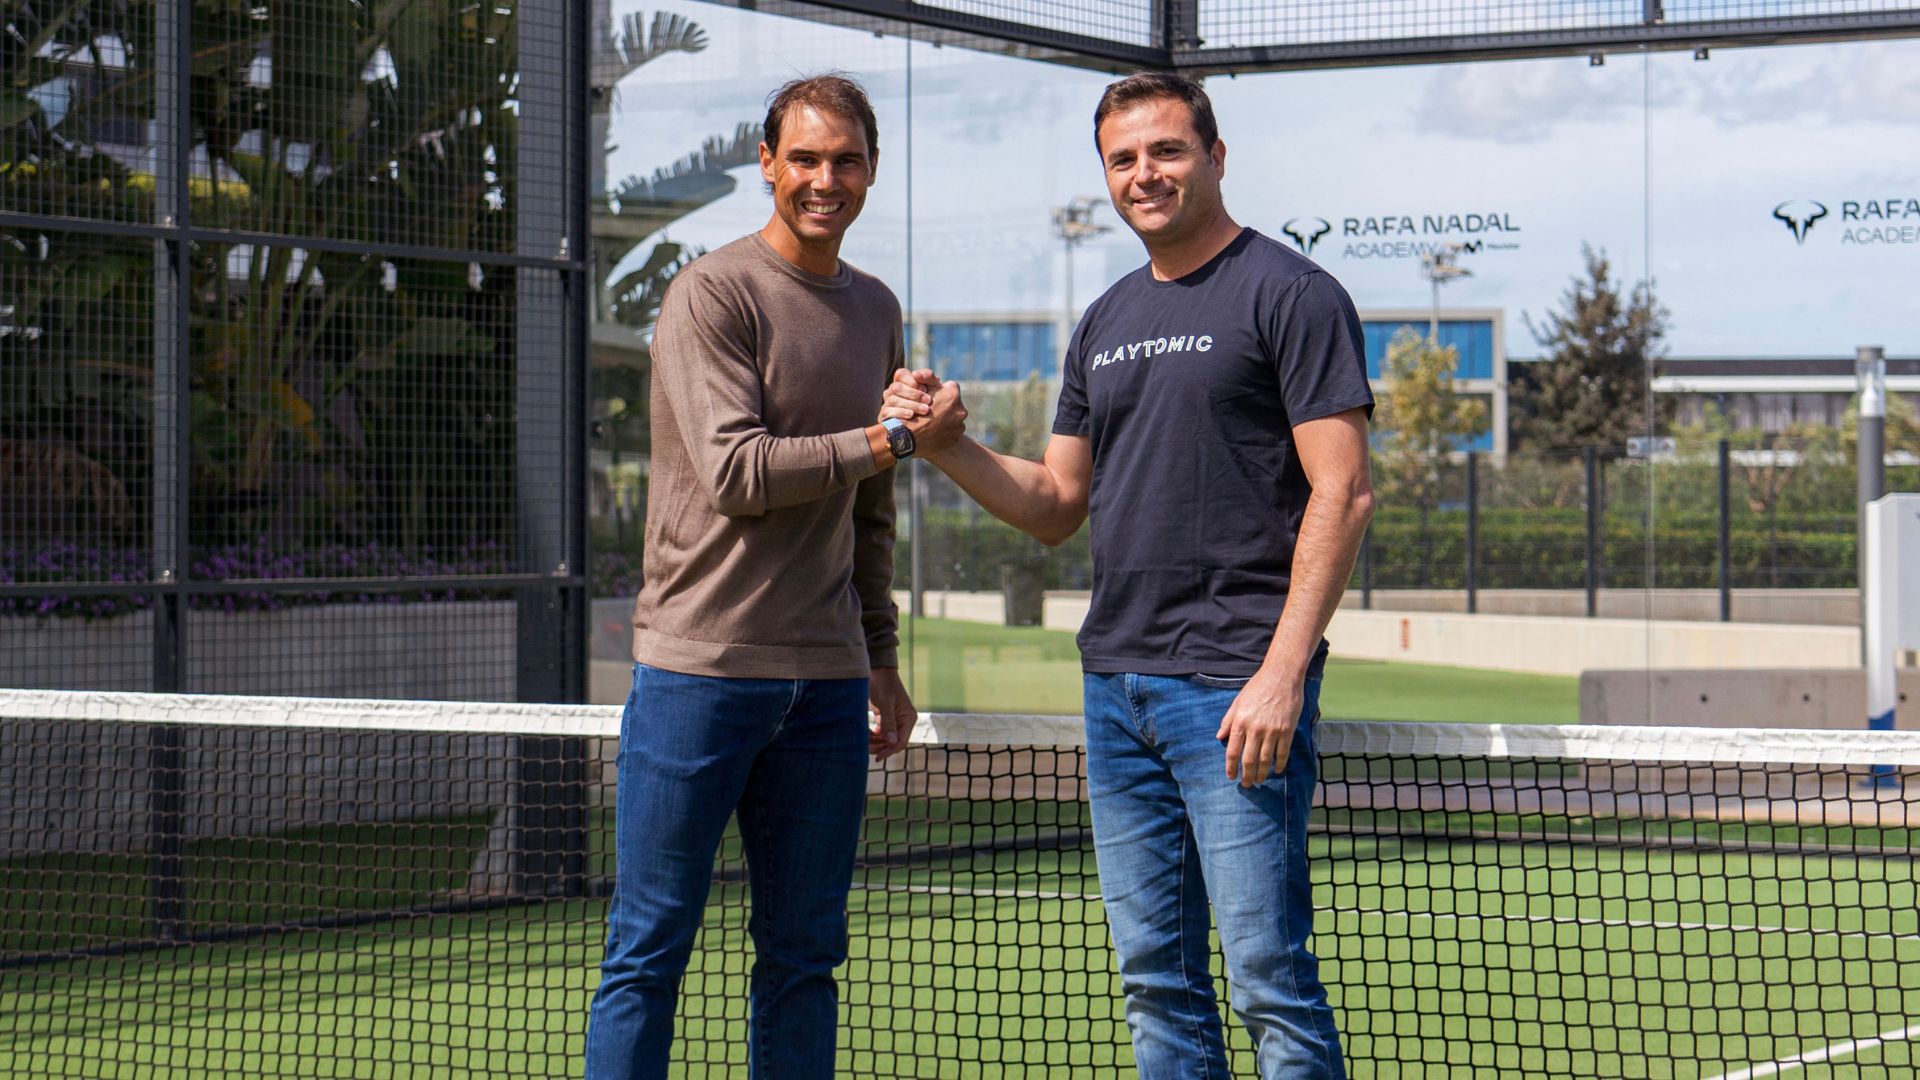 Rafael Nadal becomes a shareholder of Playtomic